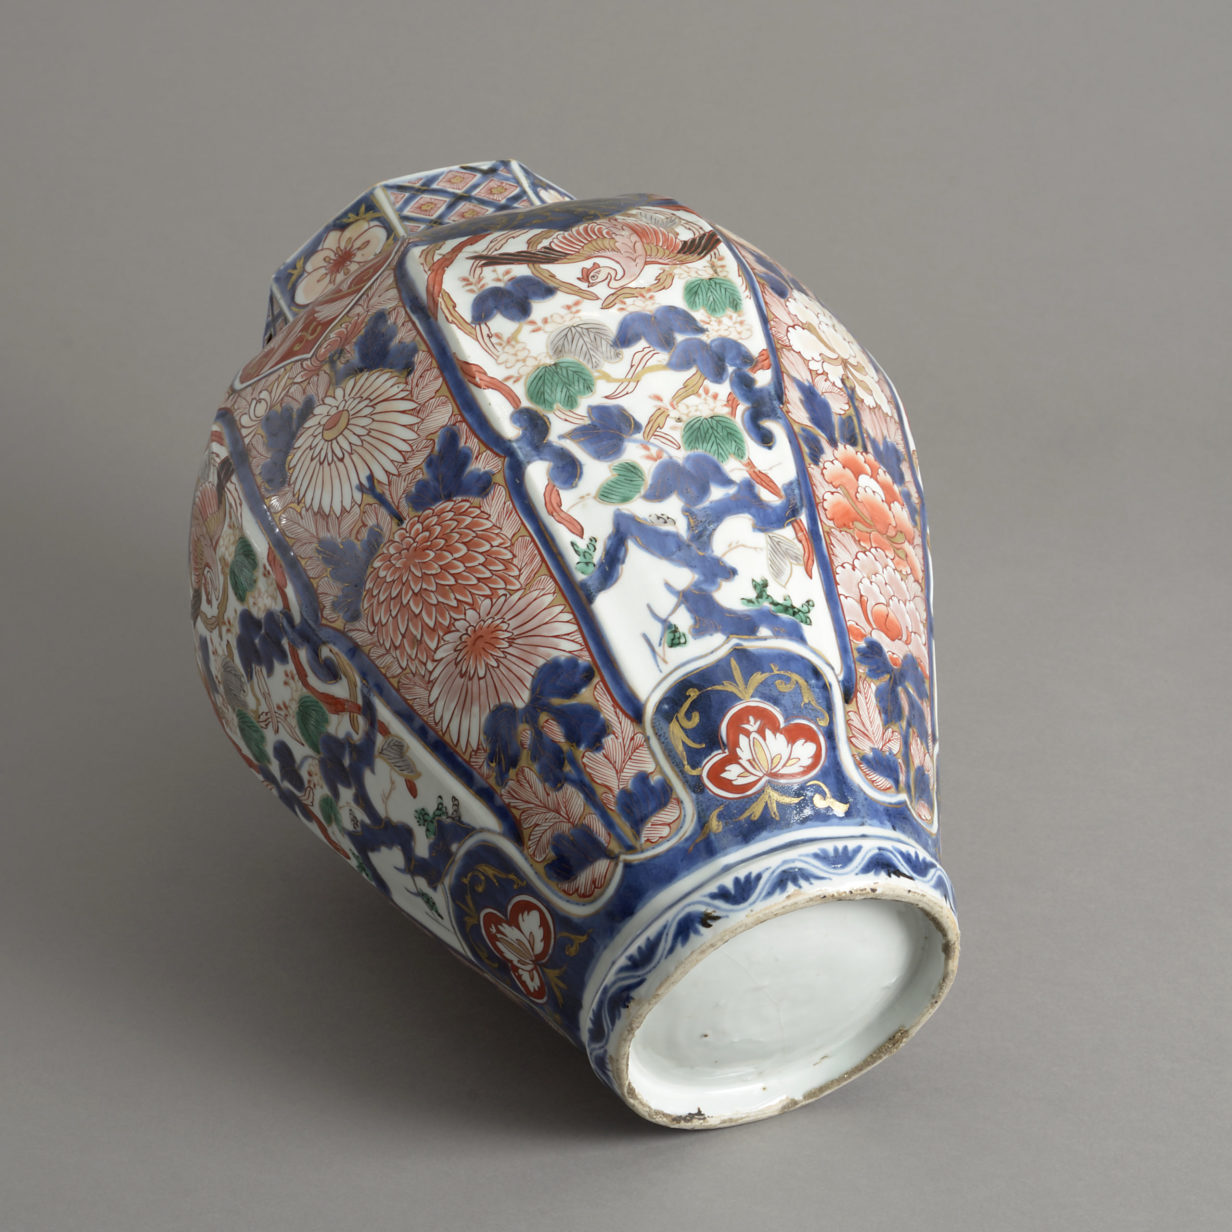 An early 18th century imari porcelain vase